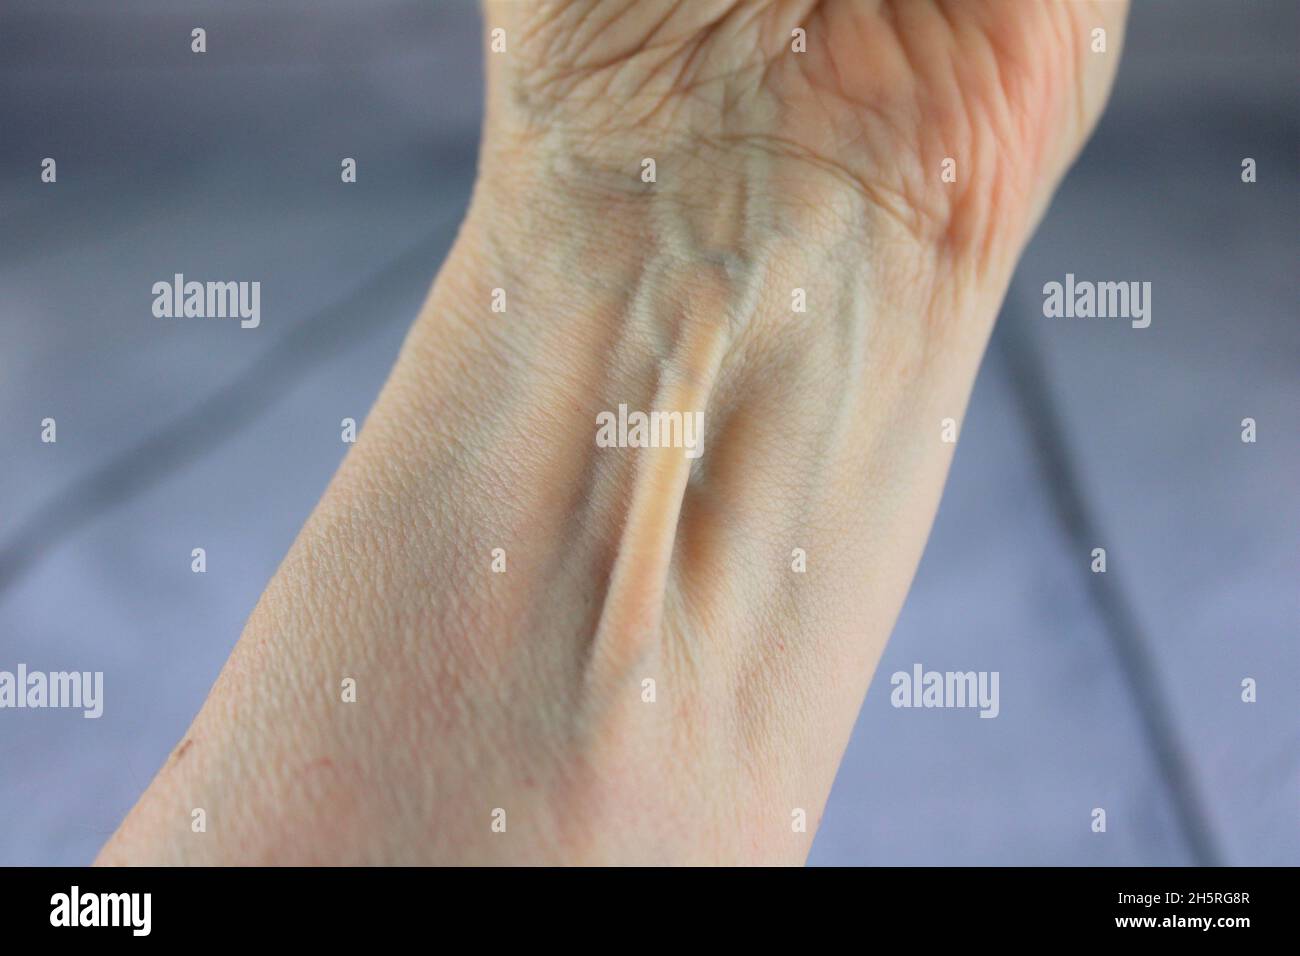 Palmaris longus muscle close up on a woman's wrist Stock Photo